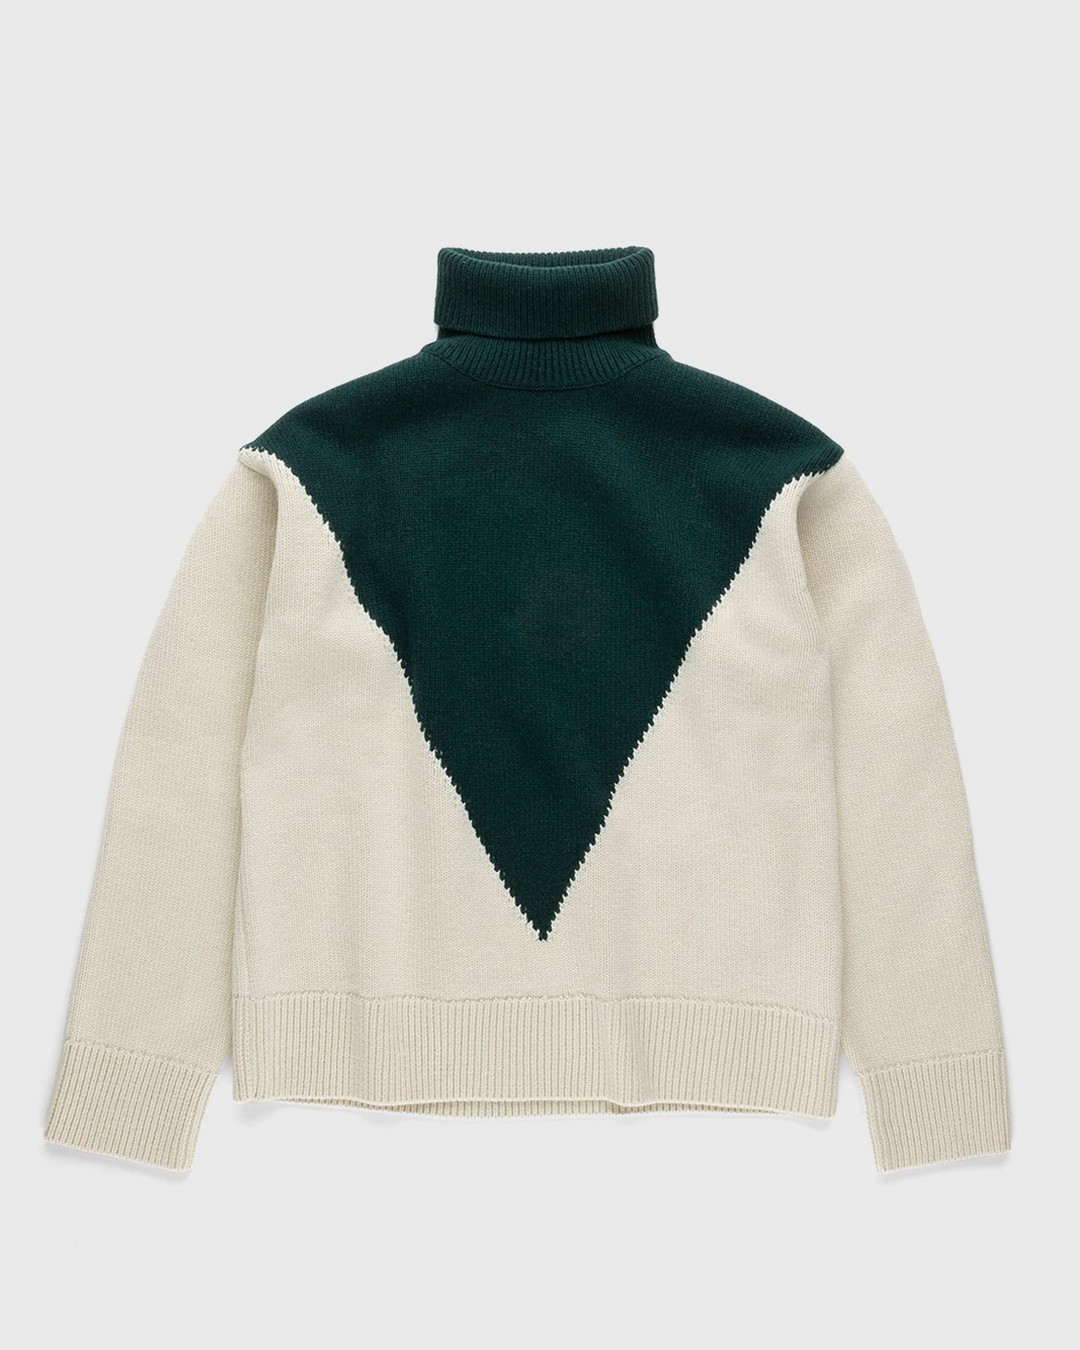 Jil Sander – Cashmere High Neck Knit Sweater Green - Turtlenecks - Green - Image 1